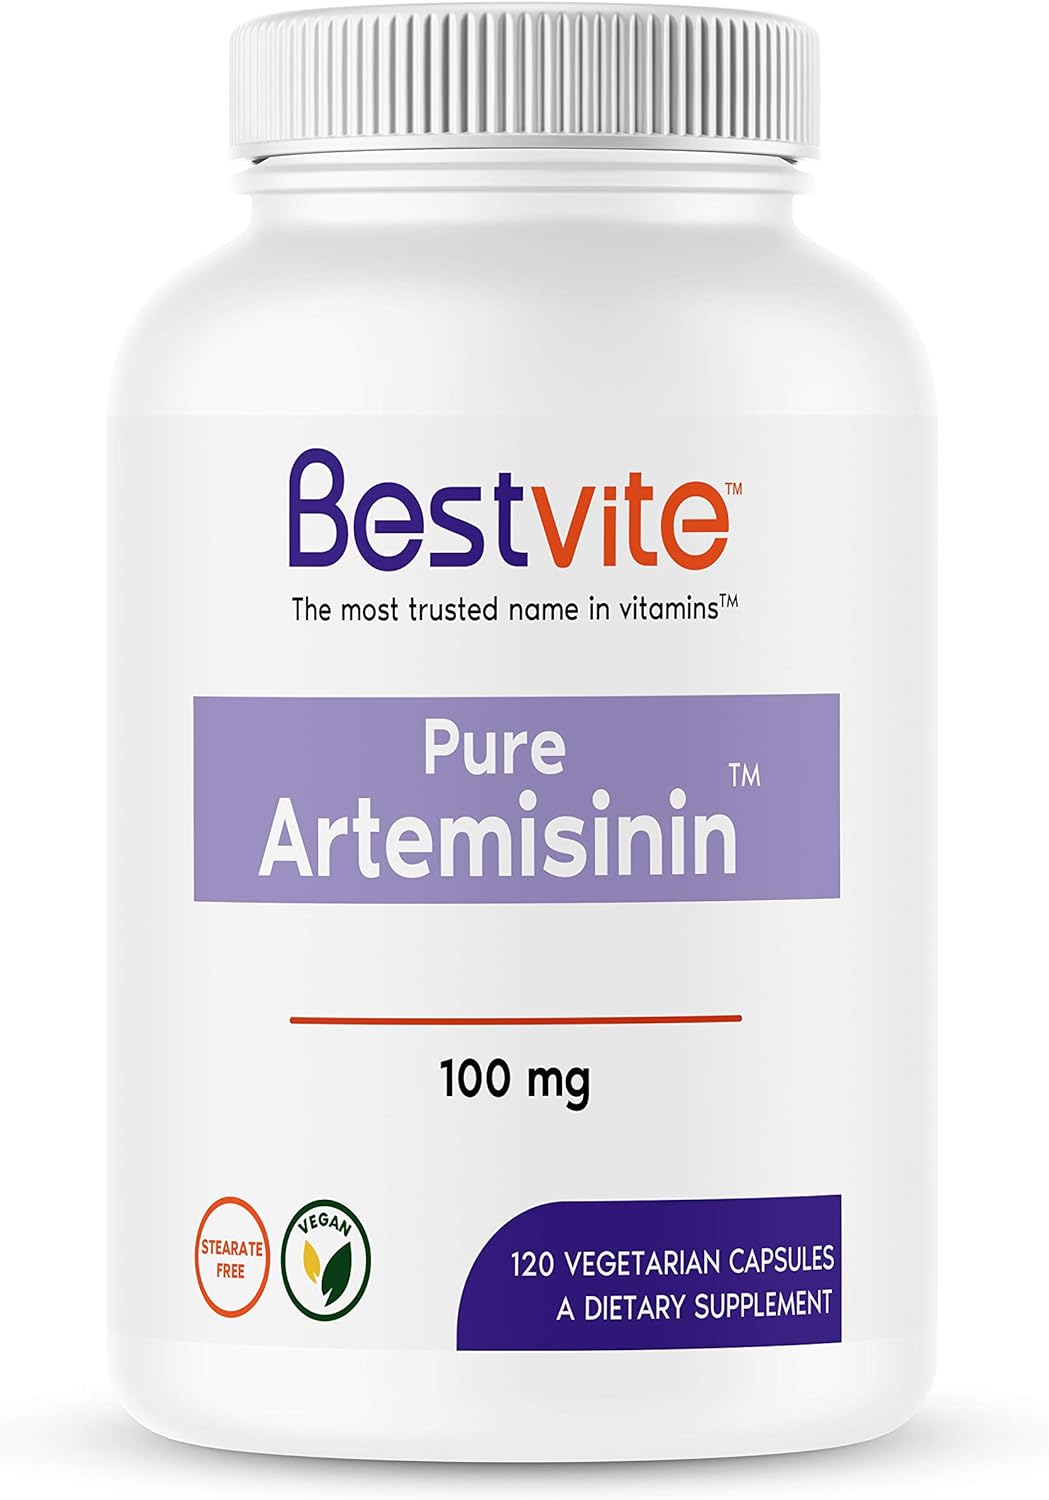 BESTVITE Artemisinin 100mg (120 Vegetarian Capsules) - No Stearates -